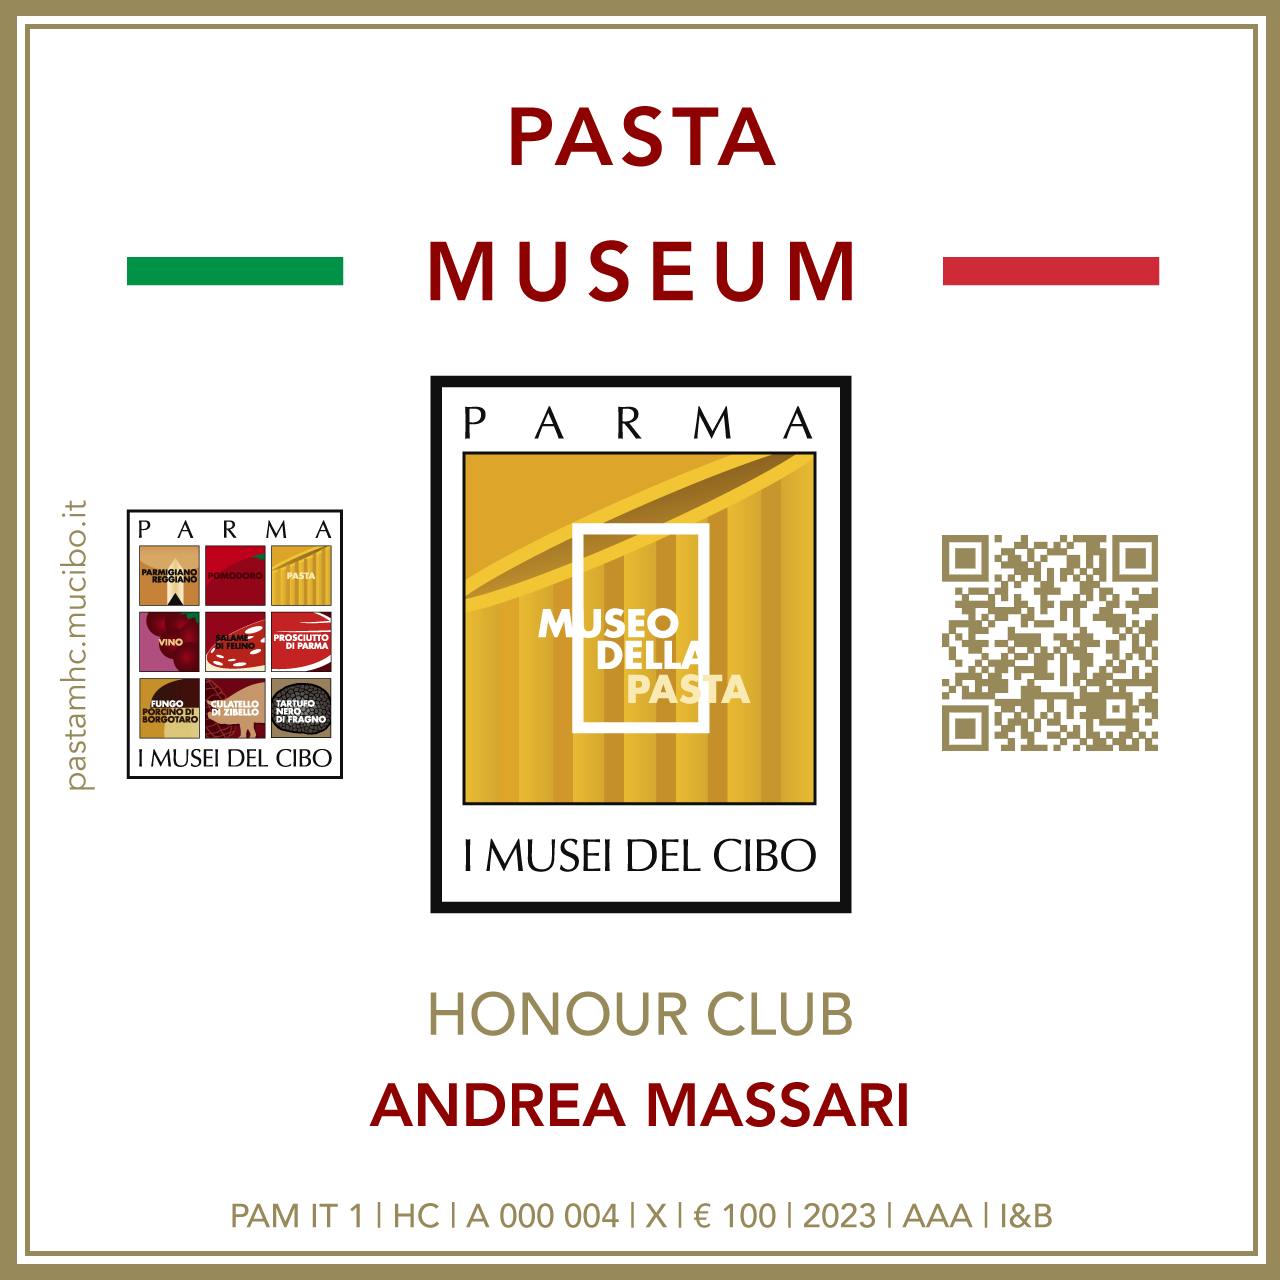 Pasta Museum Honour Club - Token Id A 000 004 - ANDREA MASSARI